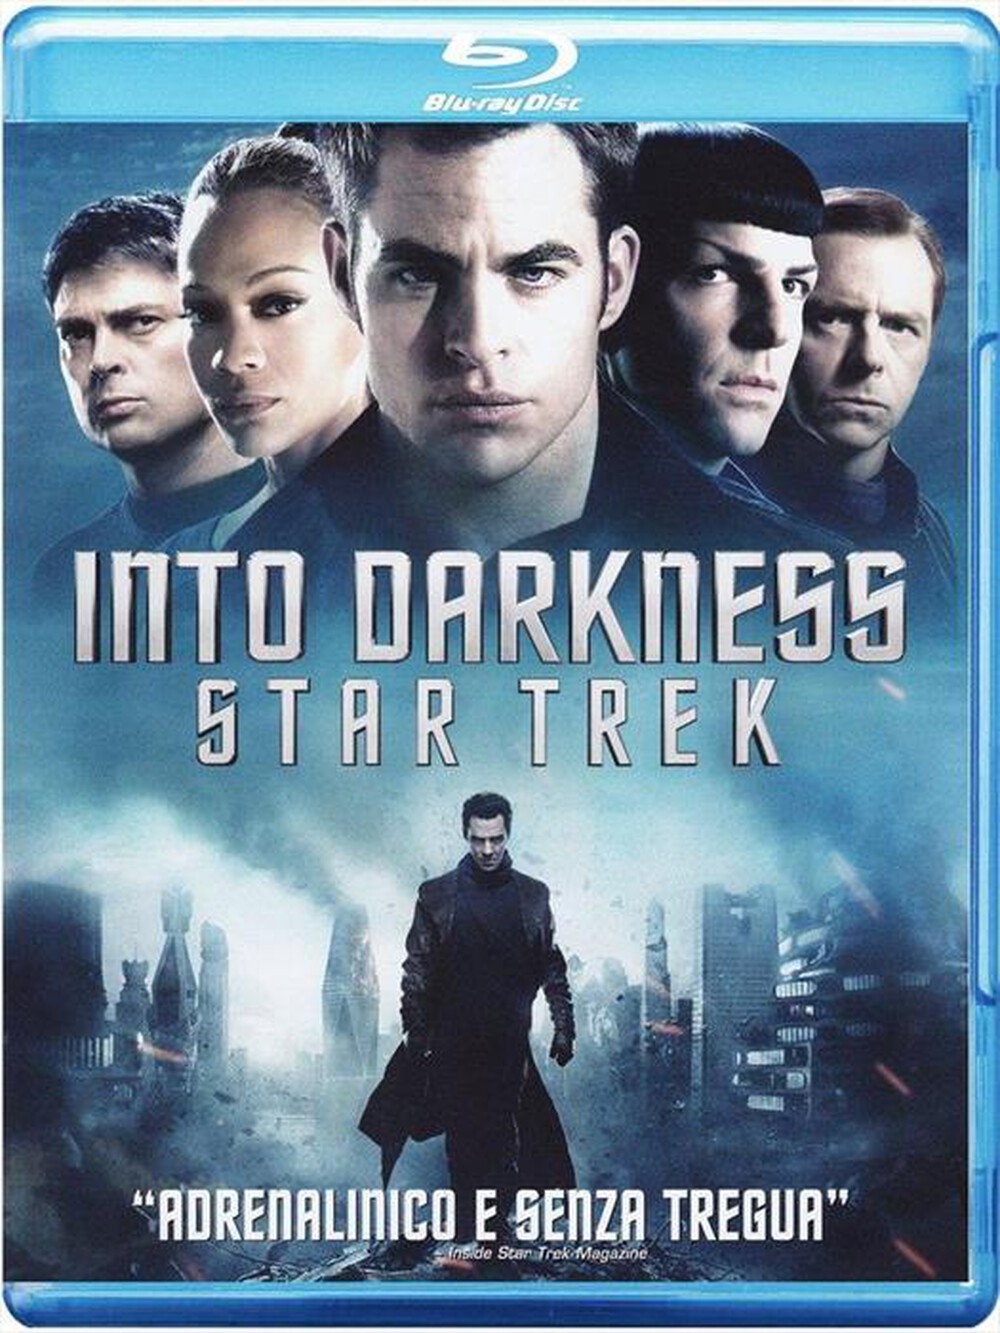 "UNIVERSAL PICTURES - Star Trek Into Darkness"